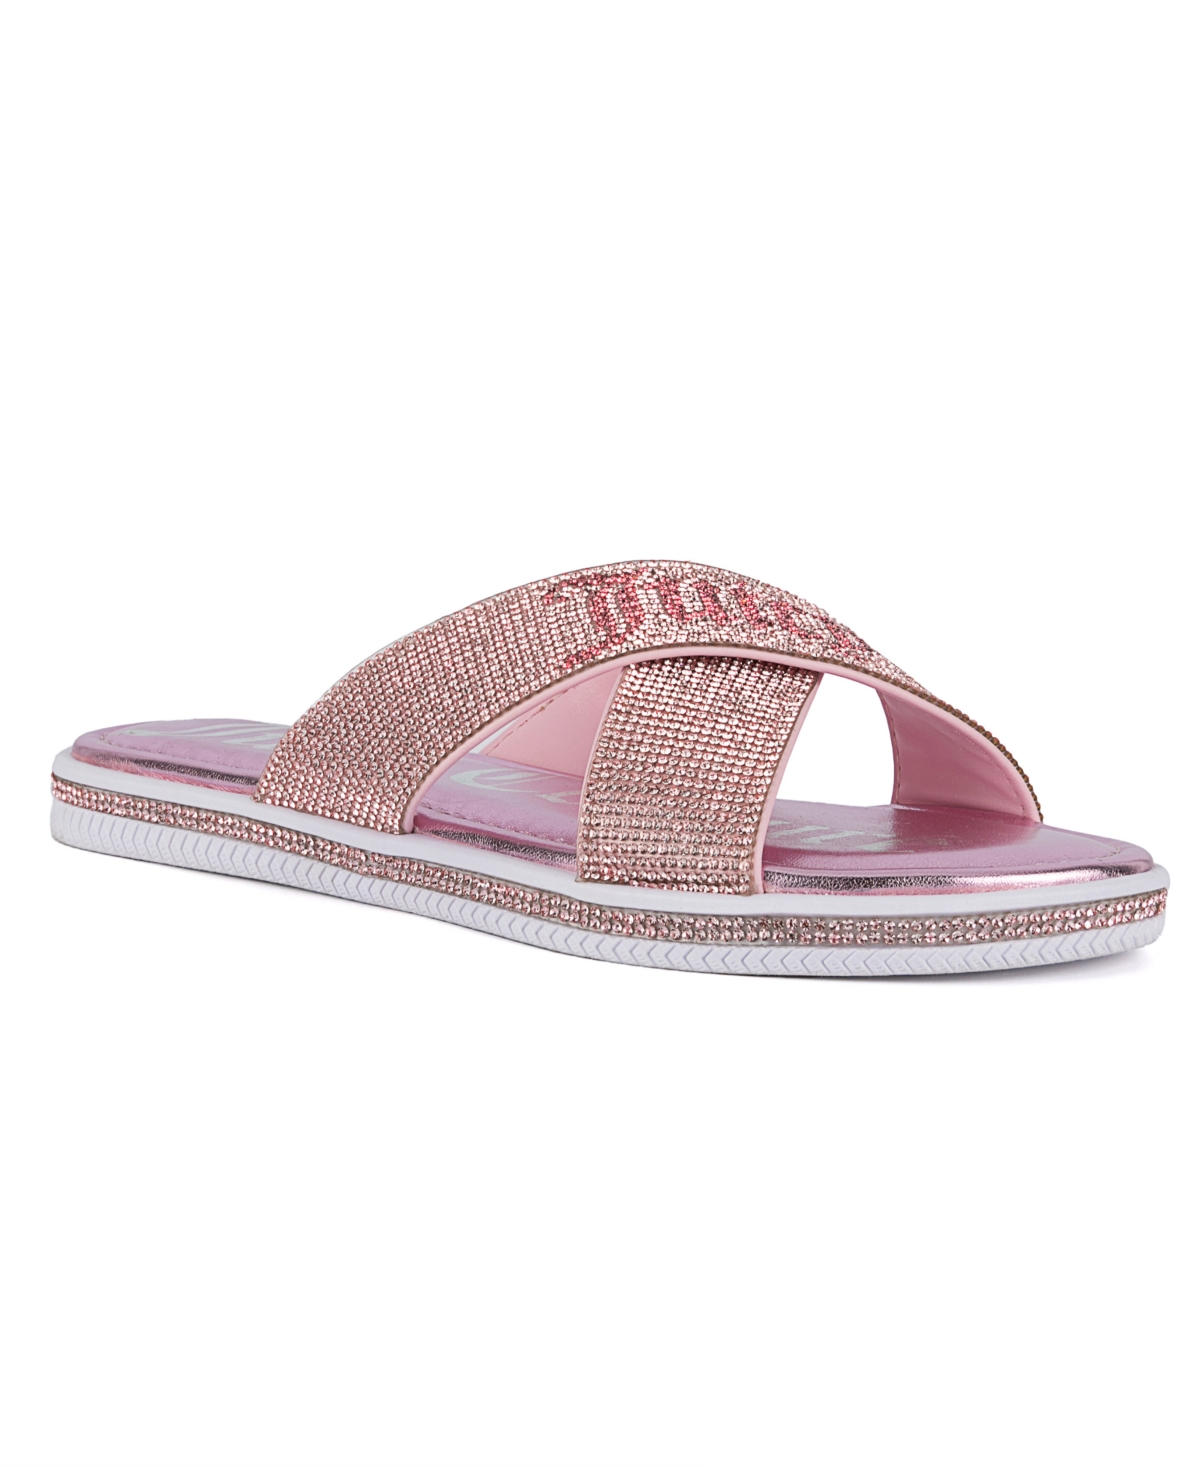 Women's Yorri Slip On Sparkly Cross-Band Flat Sandals - Pink